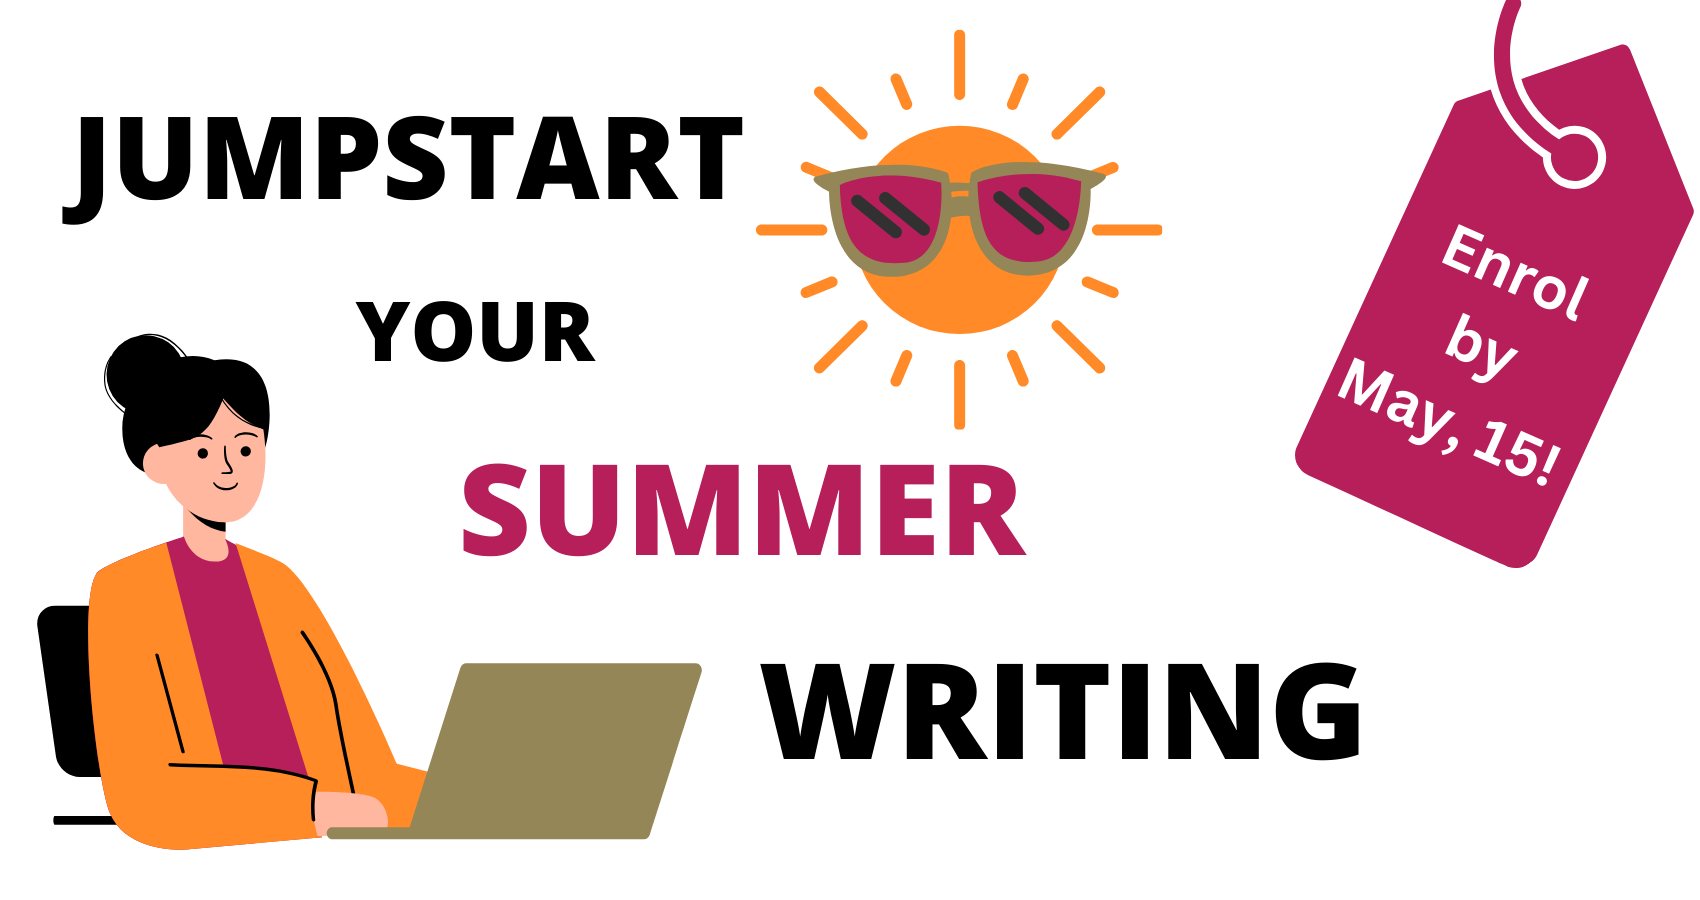 Jumpstart your summer writing - Enrol in the summer writing plan workshop!